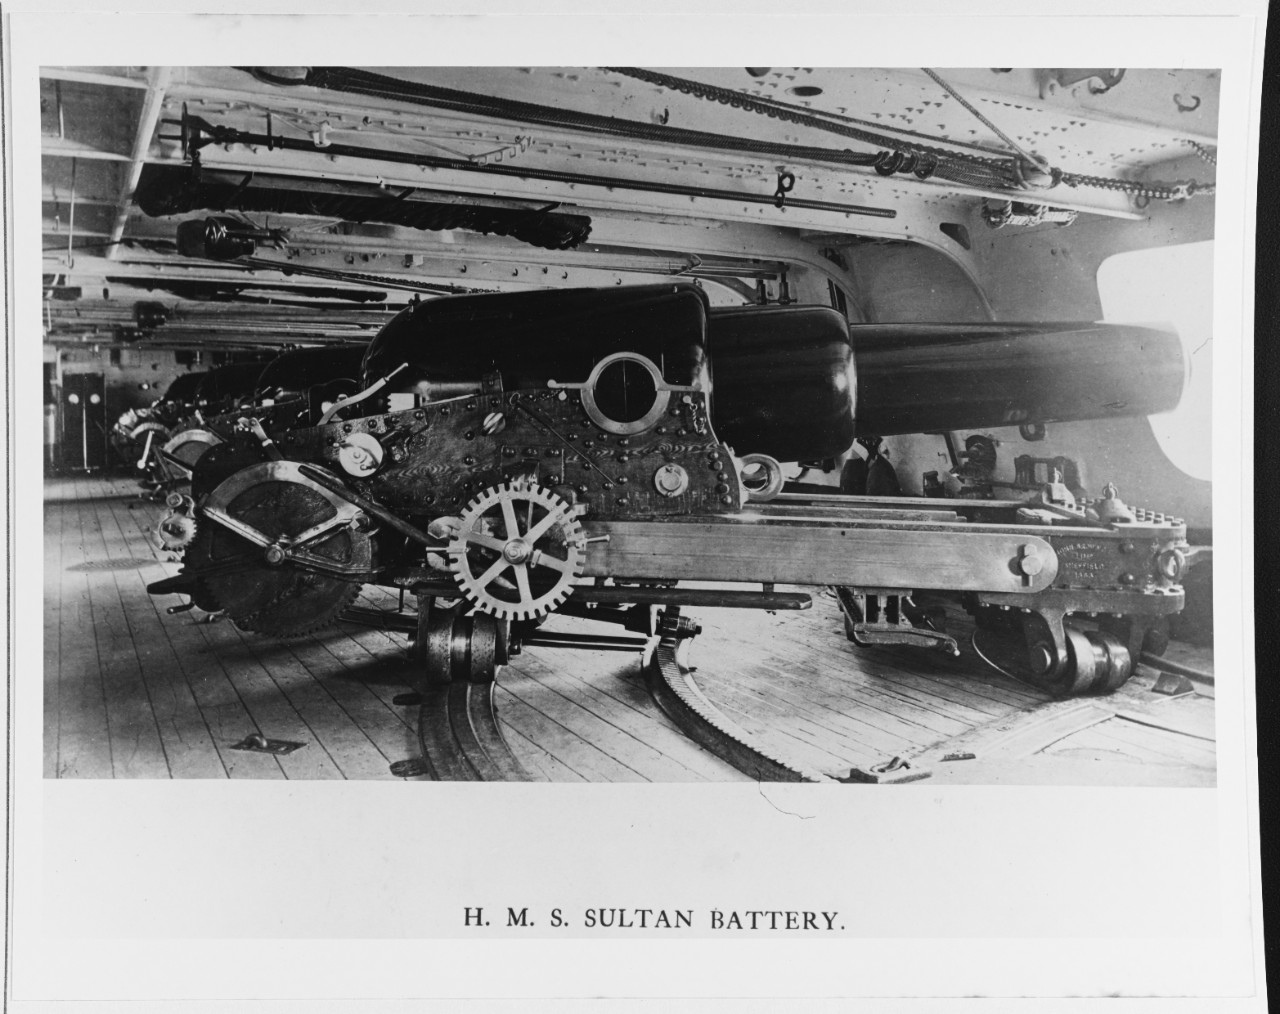 HMS SULTAN (BRITISH BATTLESHIP, 1870)